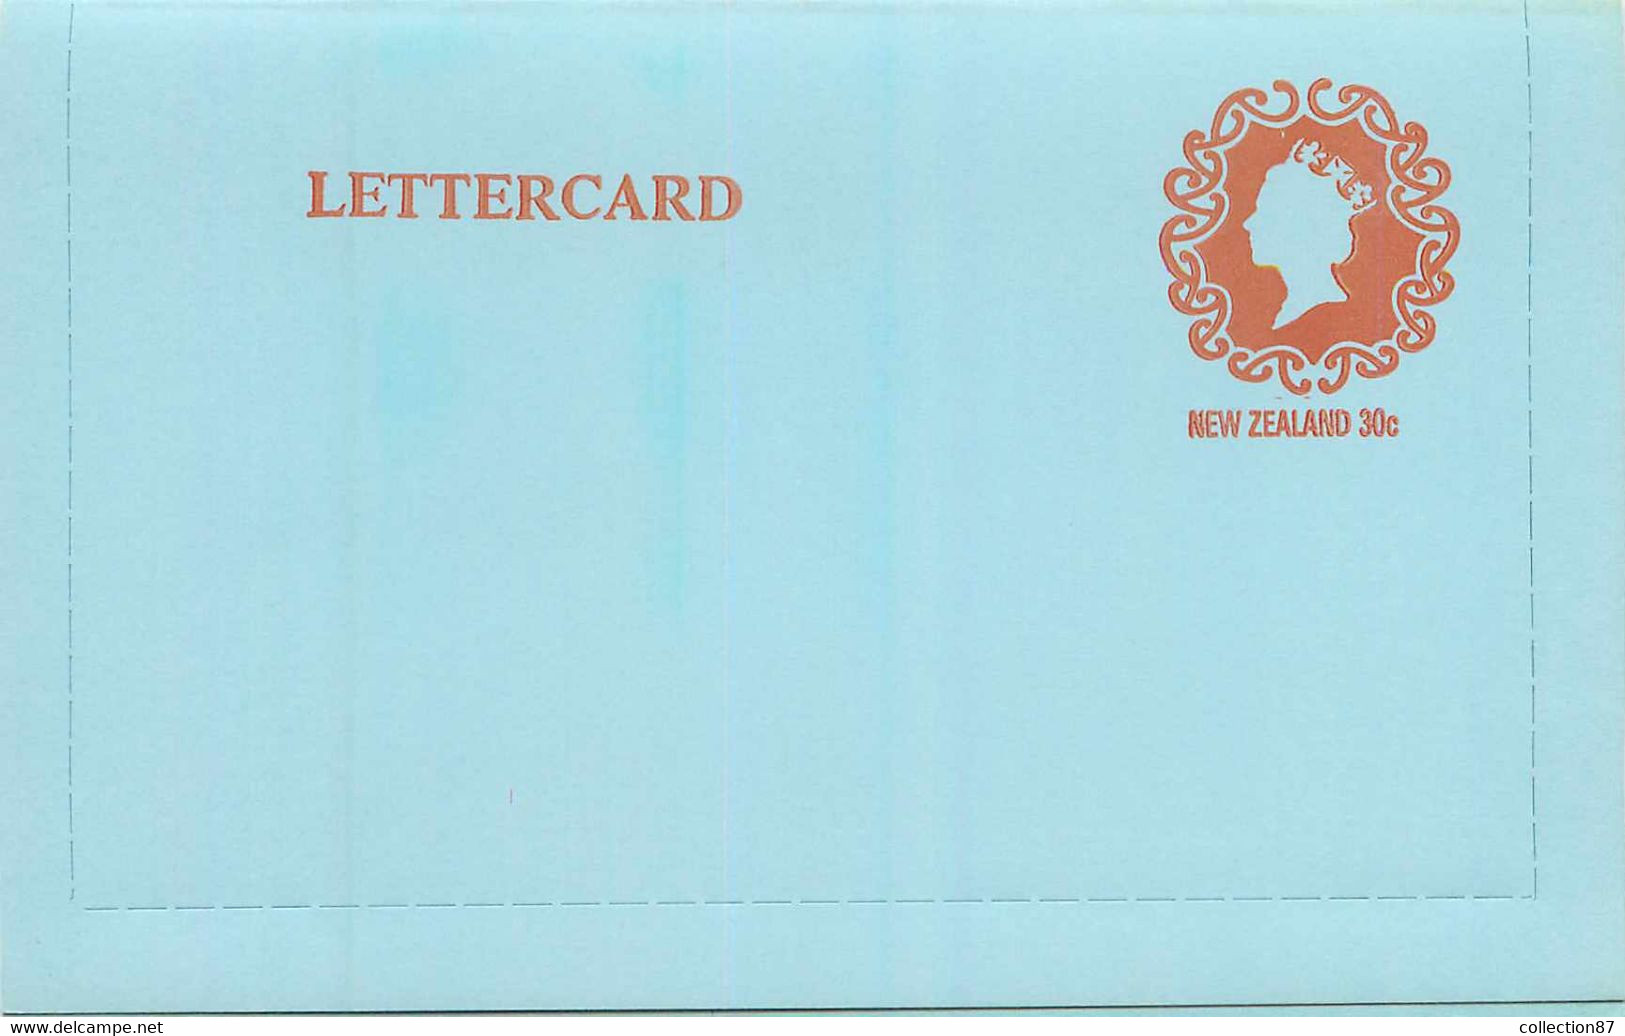 NEW ZEALAND - LETTERCARD 30c Postage Paid < ENTIER POSTAL NOUVELLE ZELANDE 30 Cent - QUEEN ELISABETH - Interi Postali